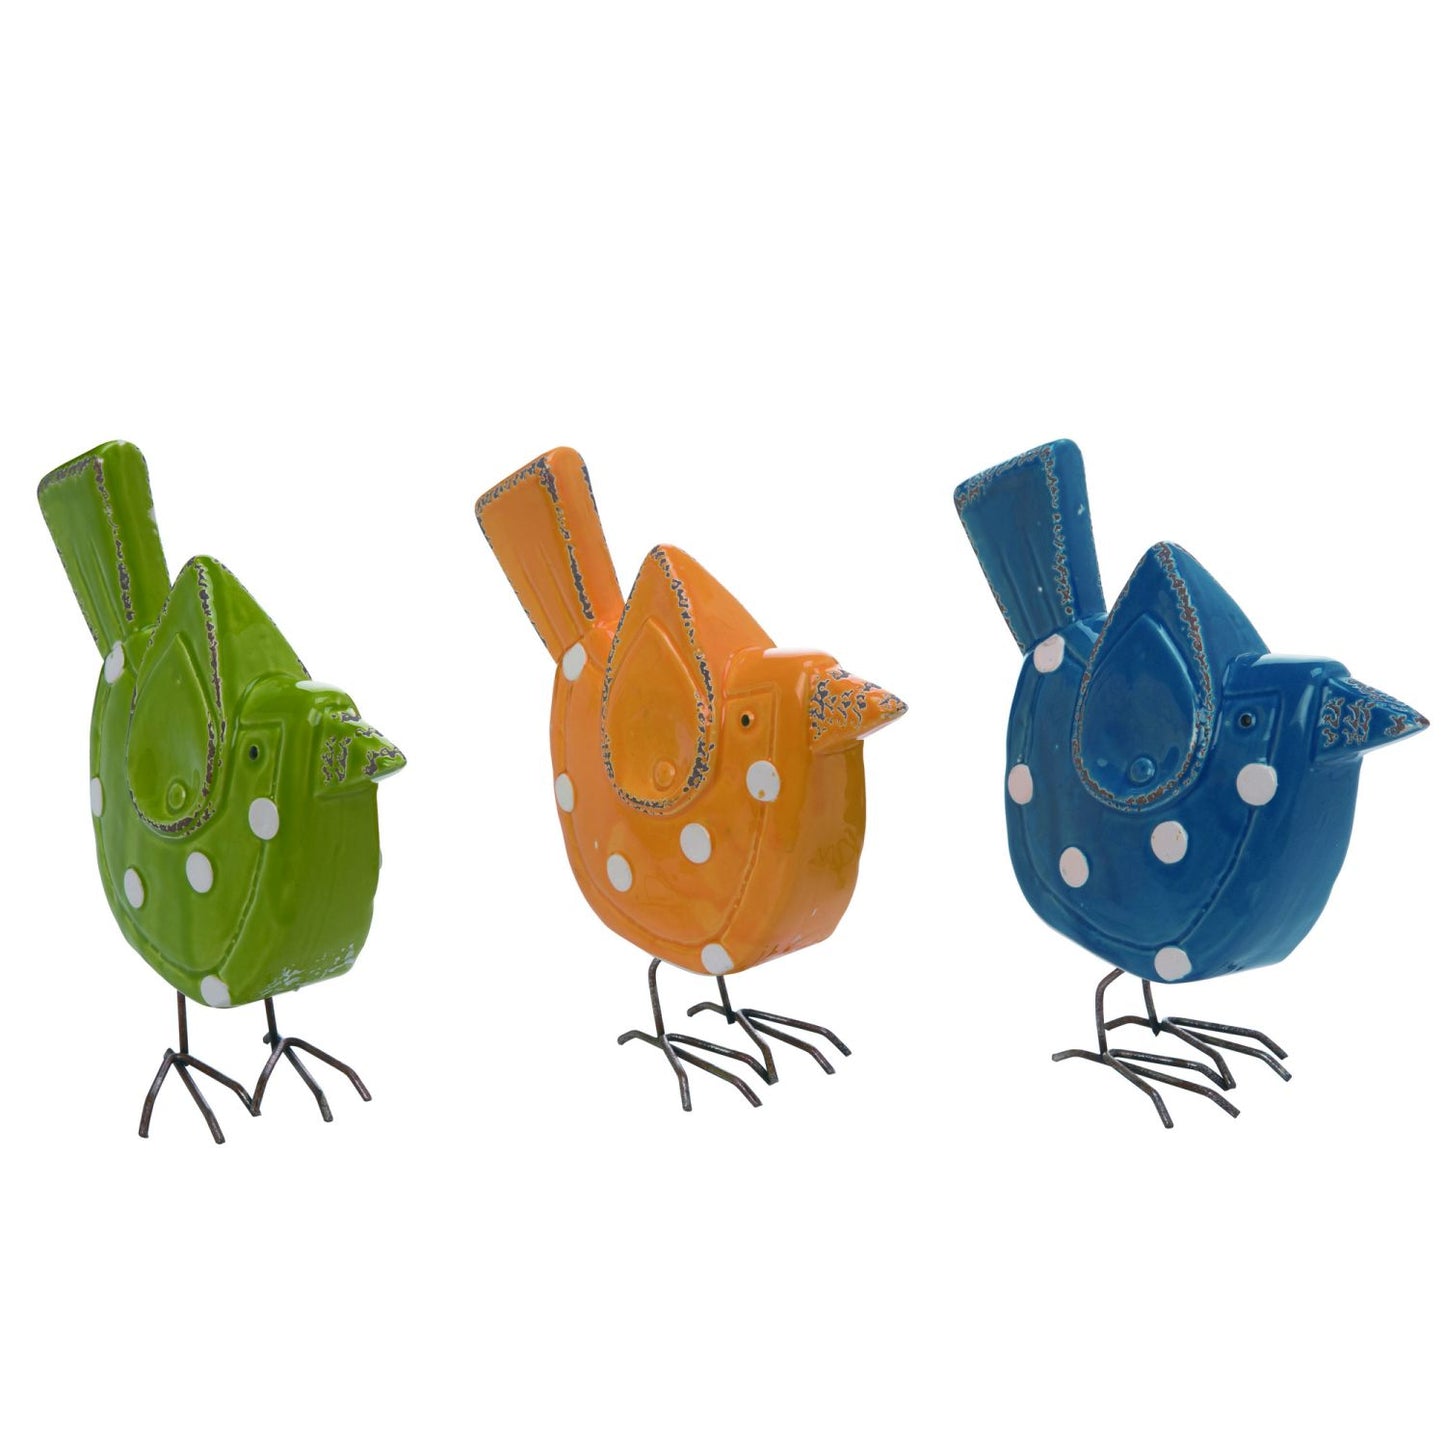 Transpac Ceramic Polka Dot Bird Decor, Set Of 3, Assortment